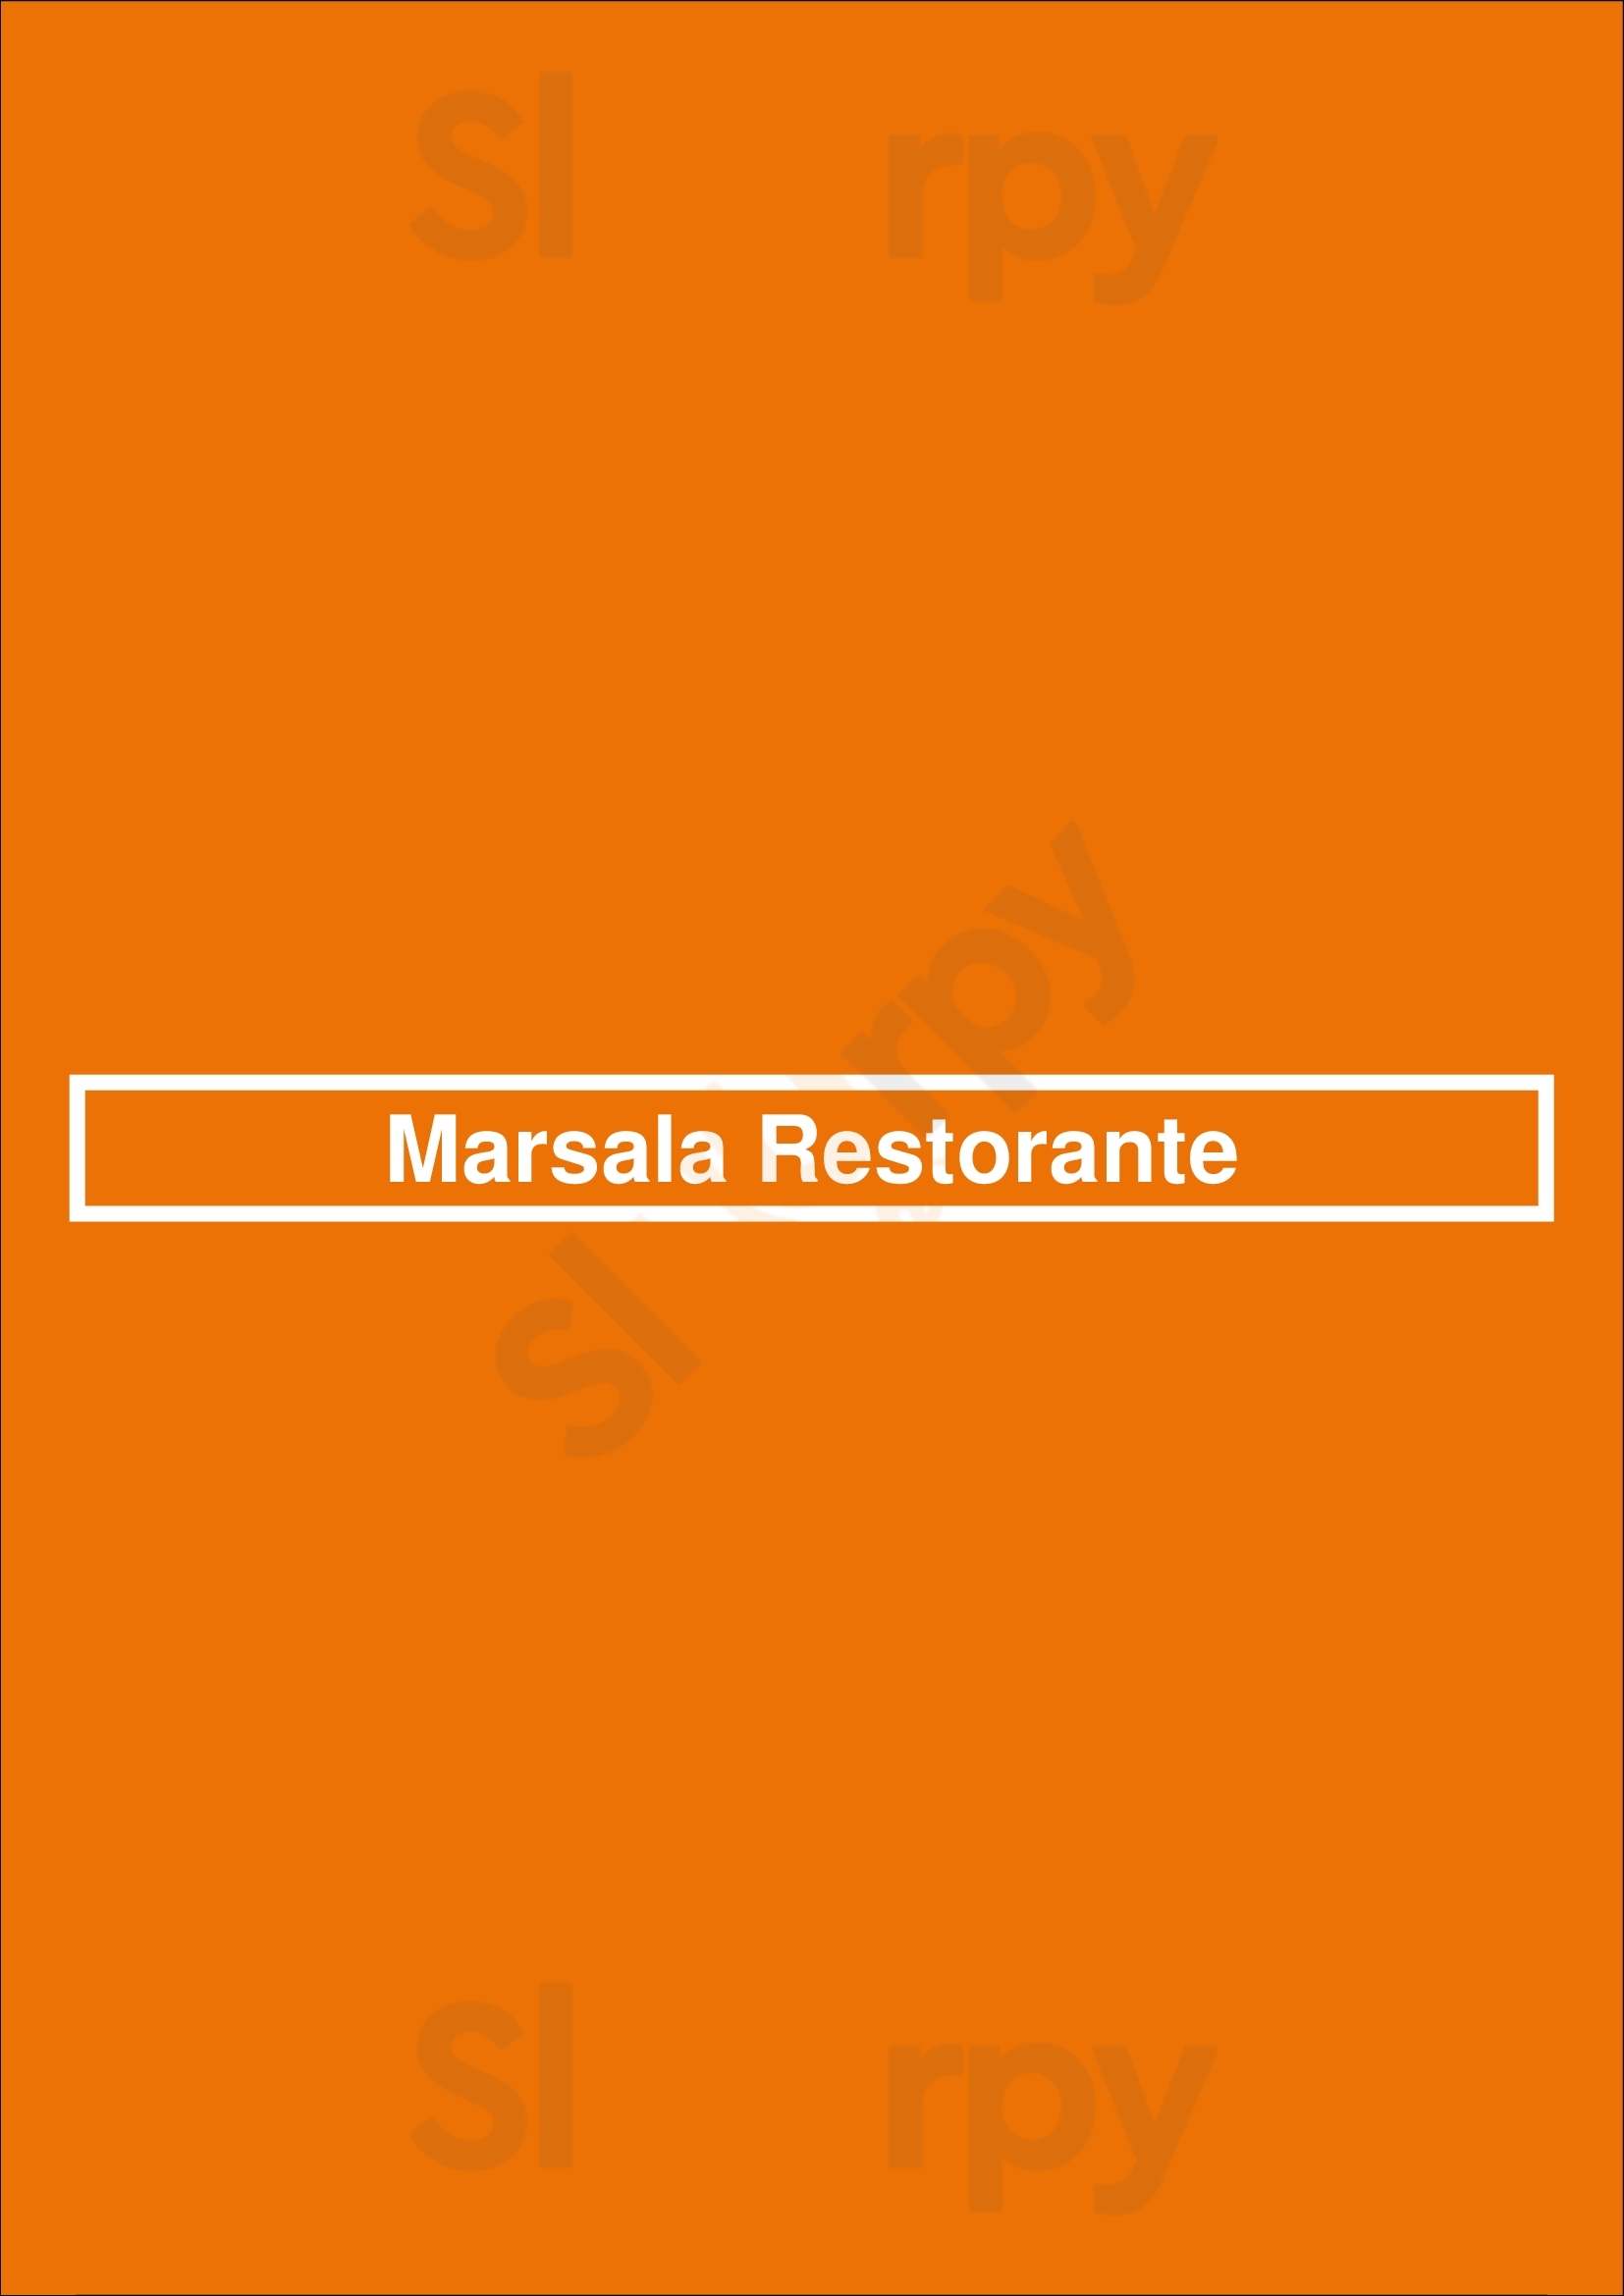 Marsala Restorante Rotterdam Menu - 1